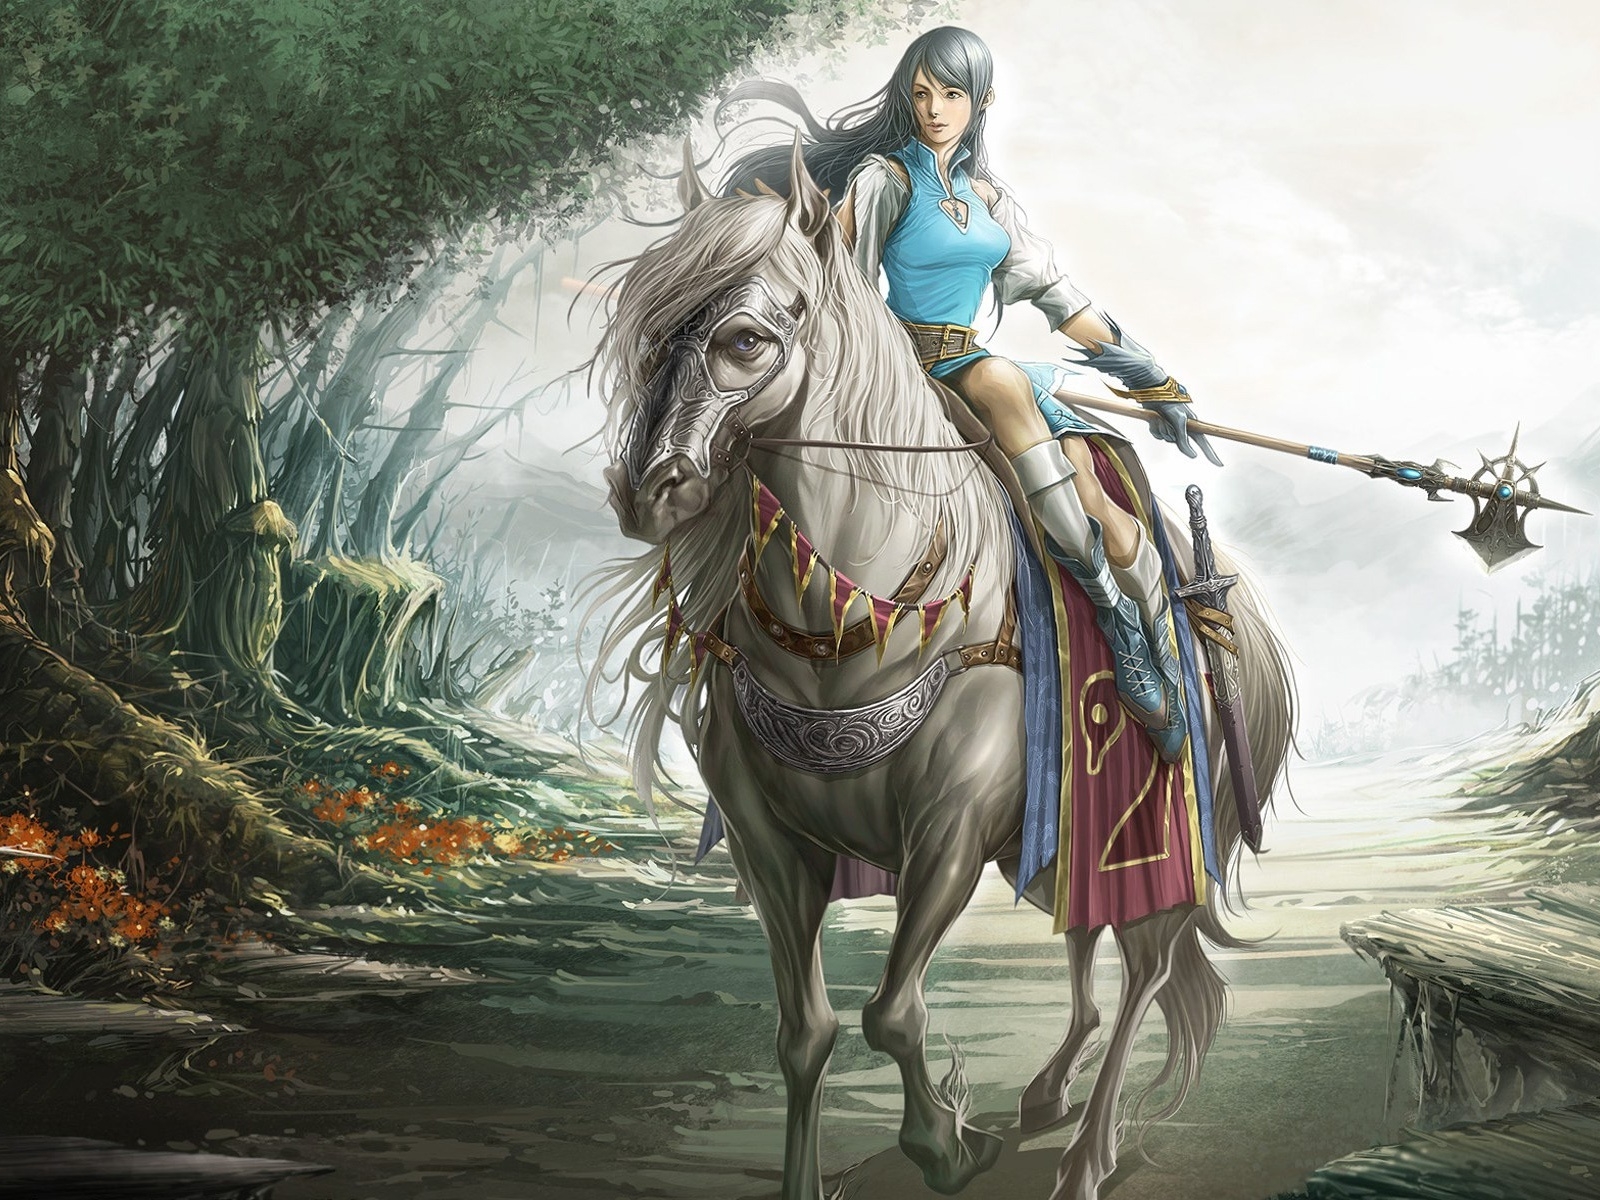 Fantasy Girl Rider for 1600 x 1200 resolution